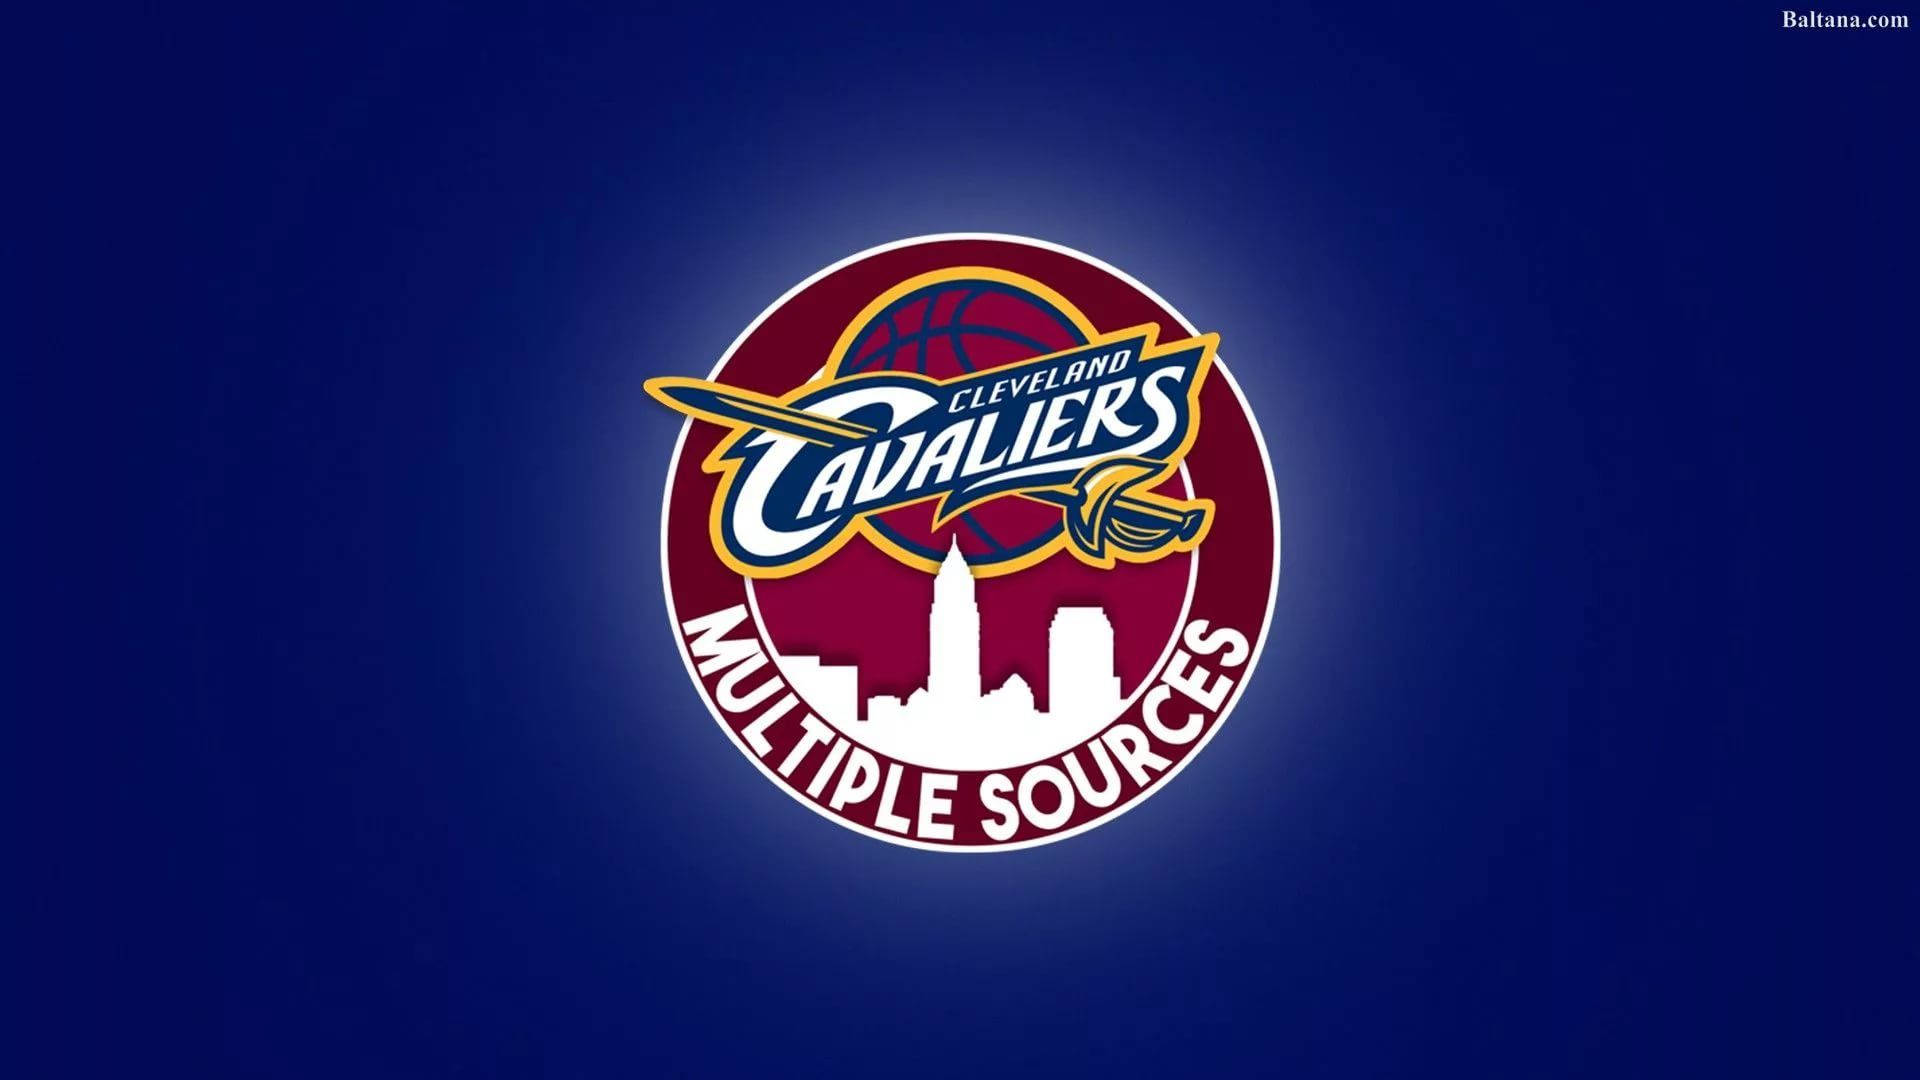 Clevelandcavaliers Stadtsilhouette-logo Wallpaper